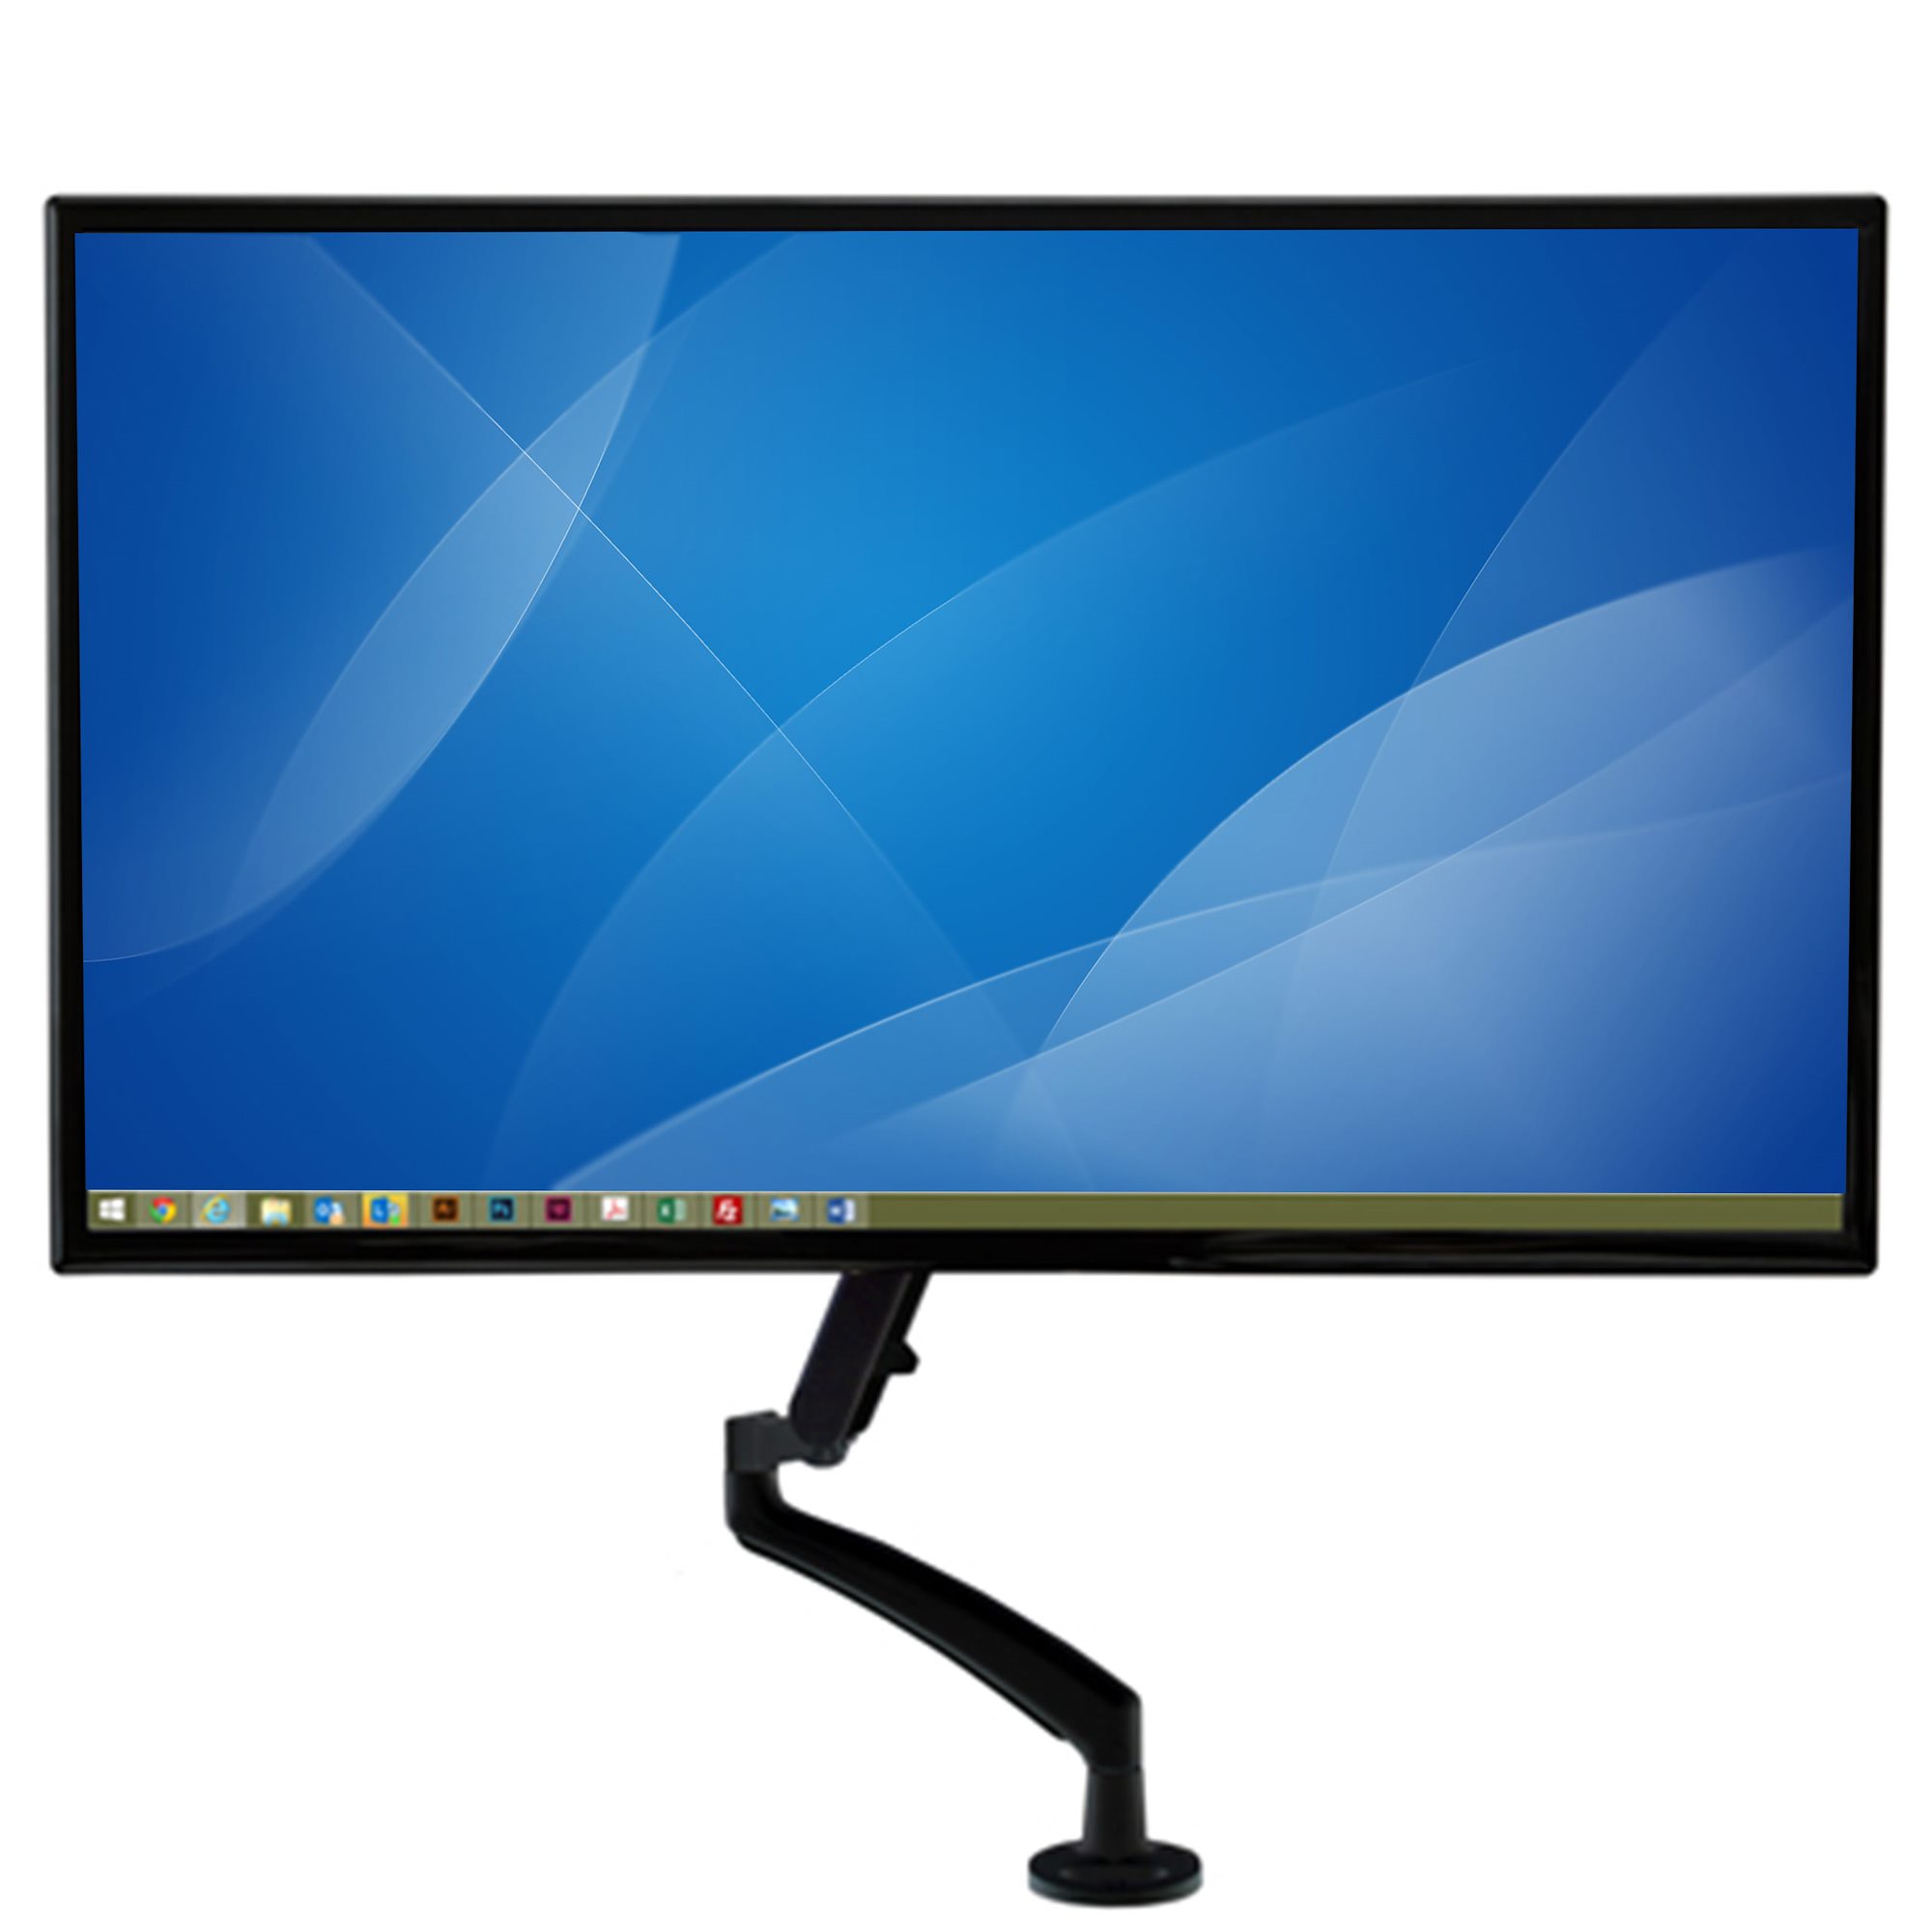 Desk Mount Monitor Arm with 2x USB 3.0 ports - Slim Full Motion Adjustable  Single Monitor VESA Mount up to 34 (17.6lb/8kg) Display - Ergonomic